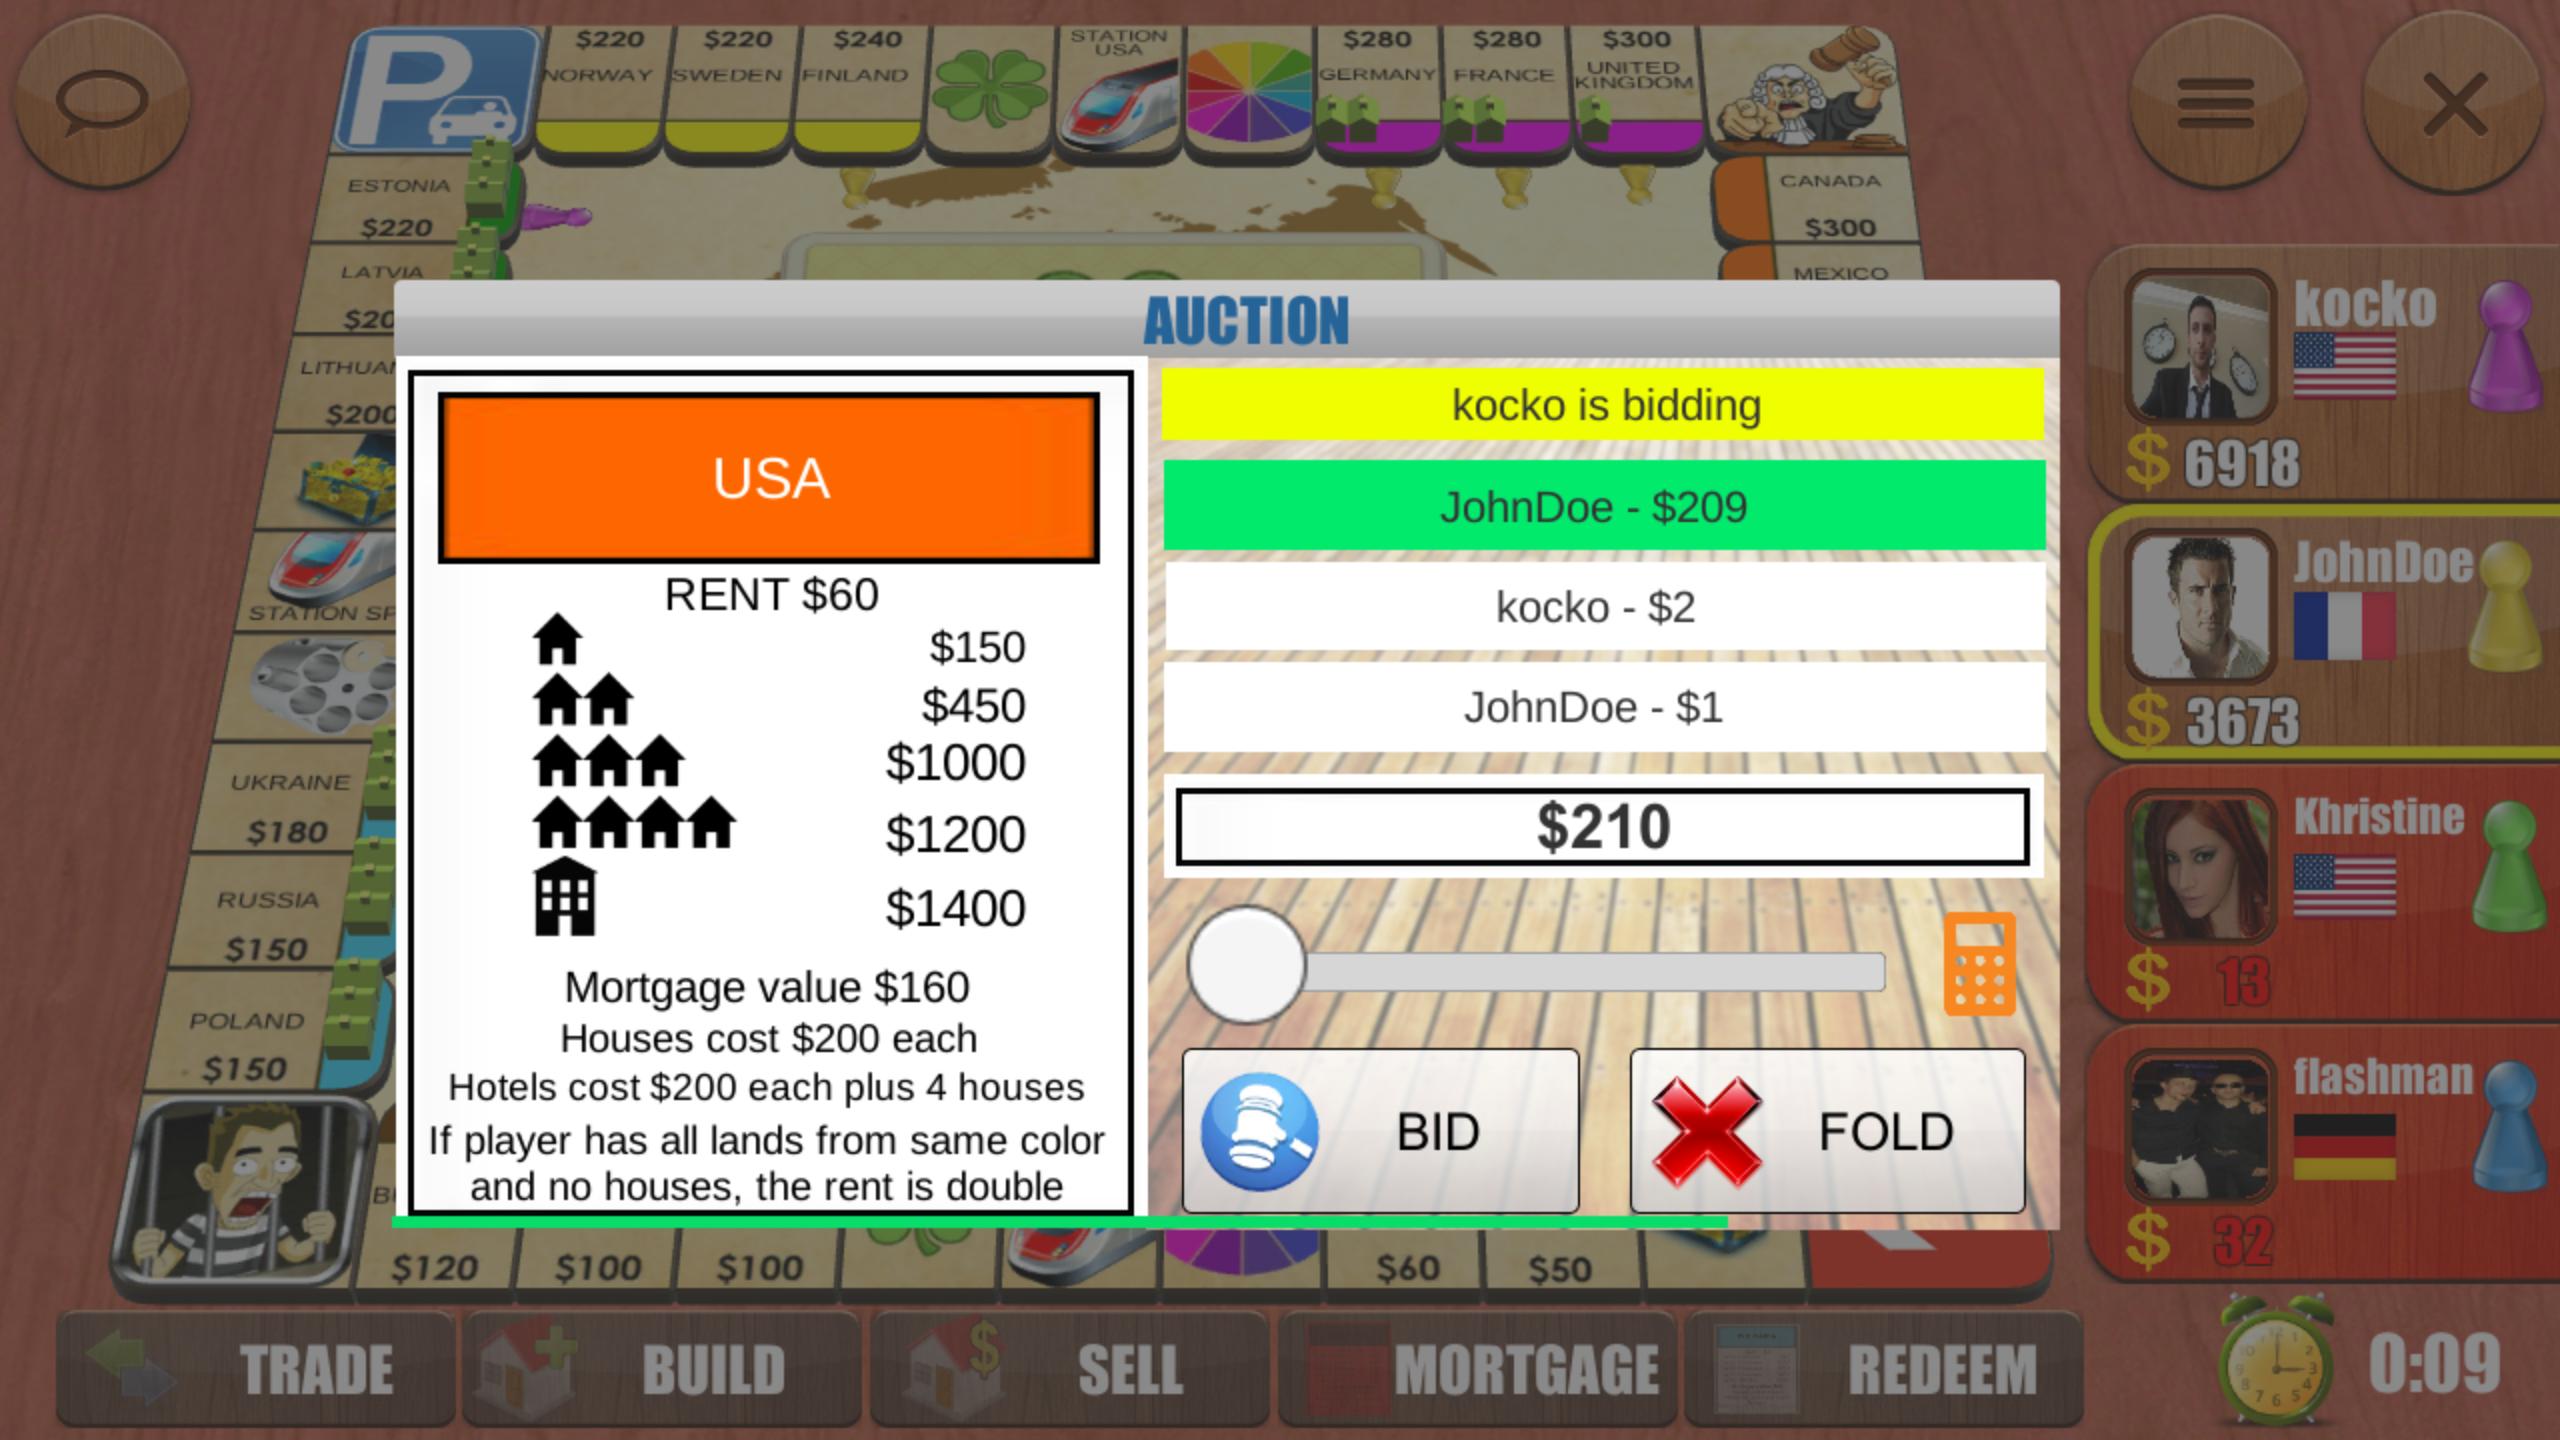 Rento Dice Board Game Online 5.1.9 Screenshot 15